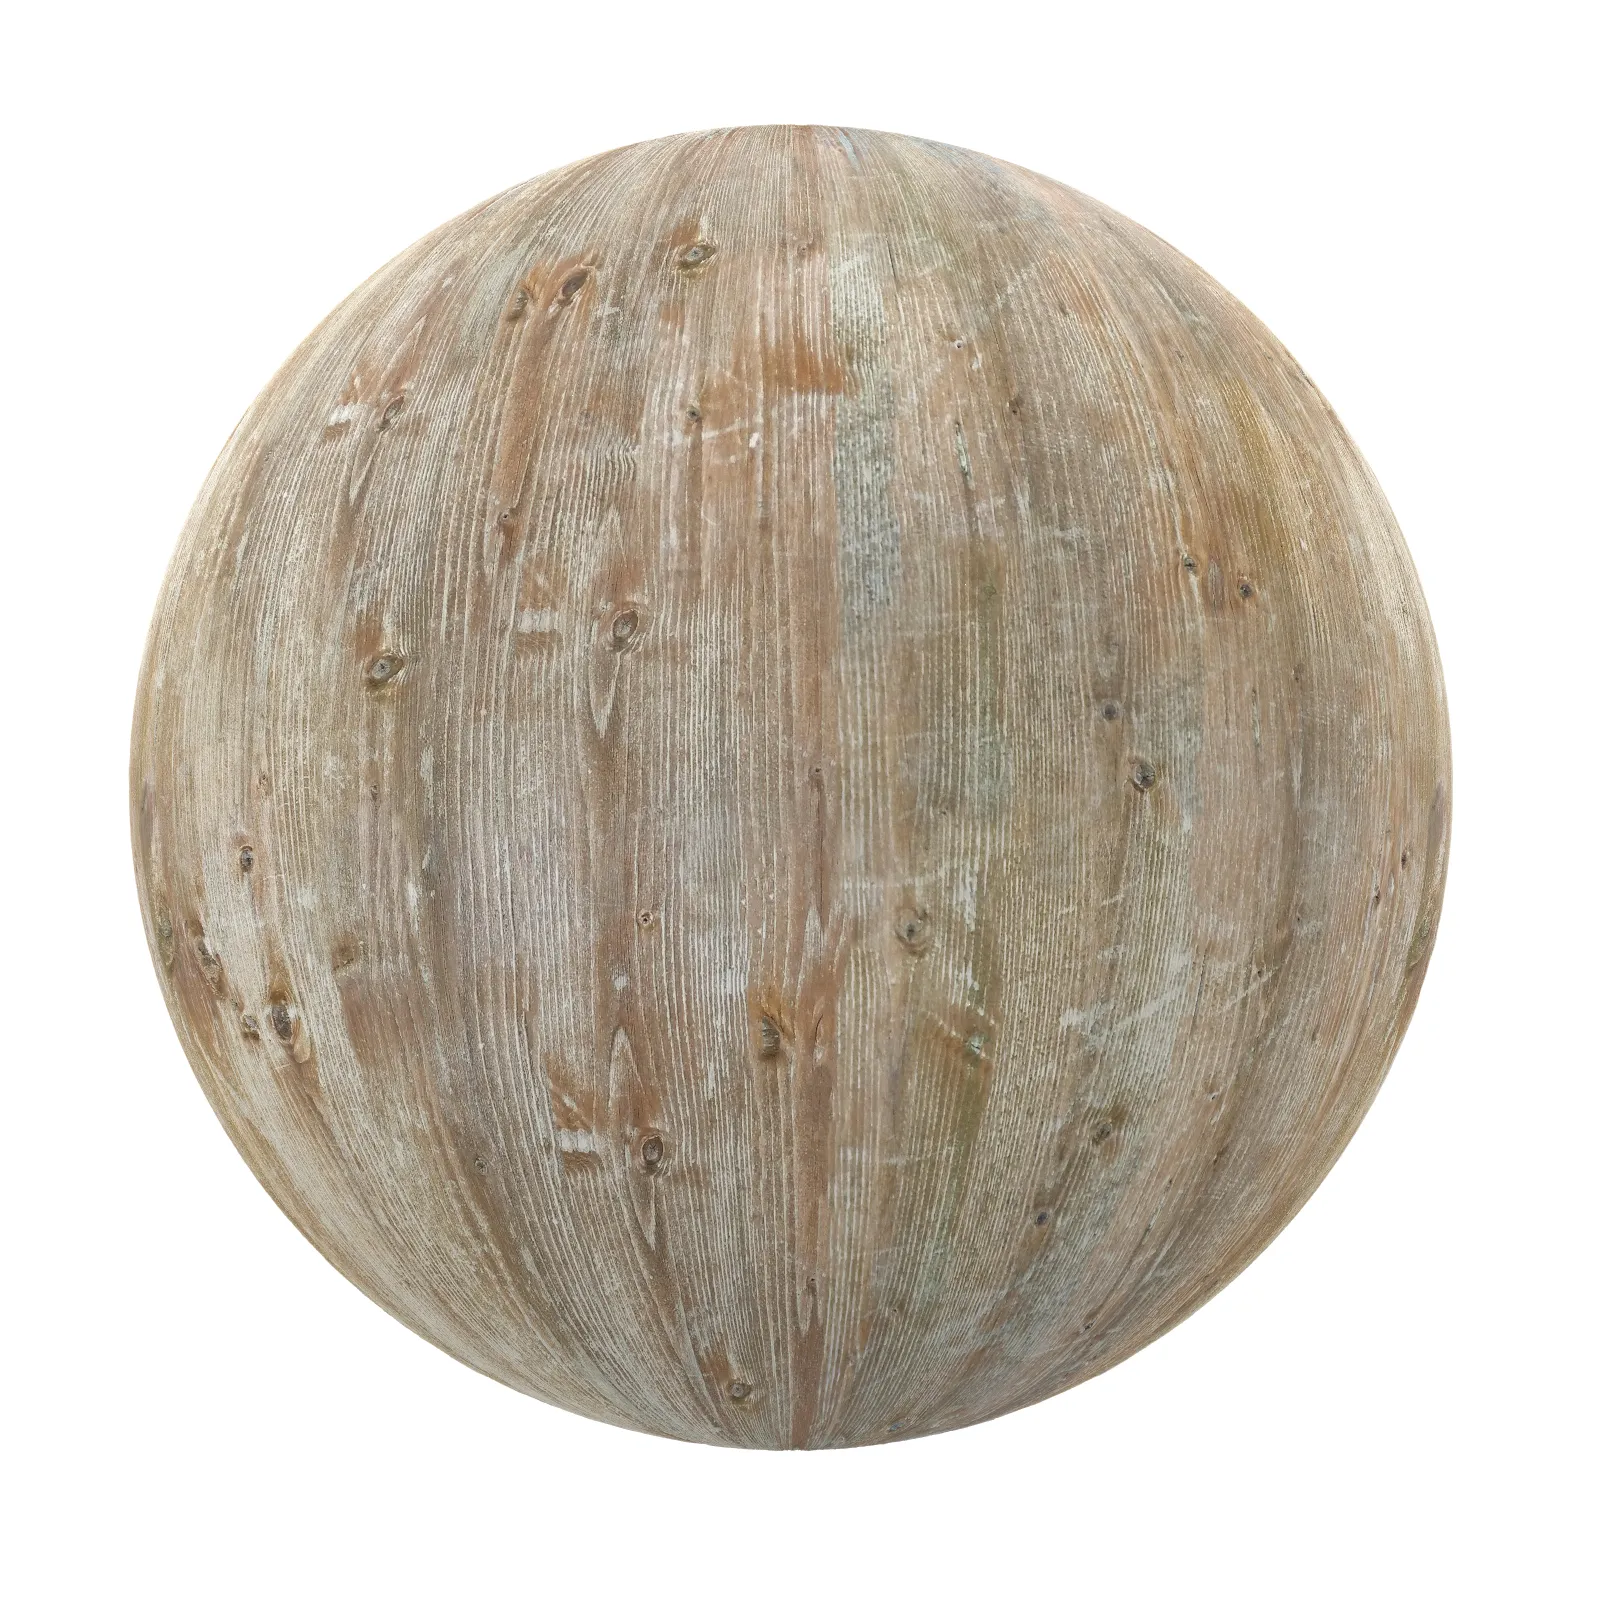 3ds Max Files – Texture – 8 – Wood Texture – 108 – Wood Texture by Minh Nguyen